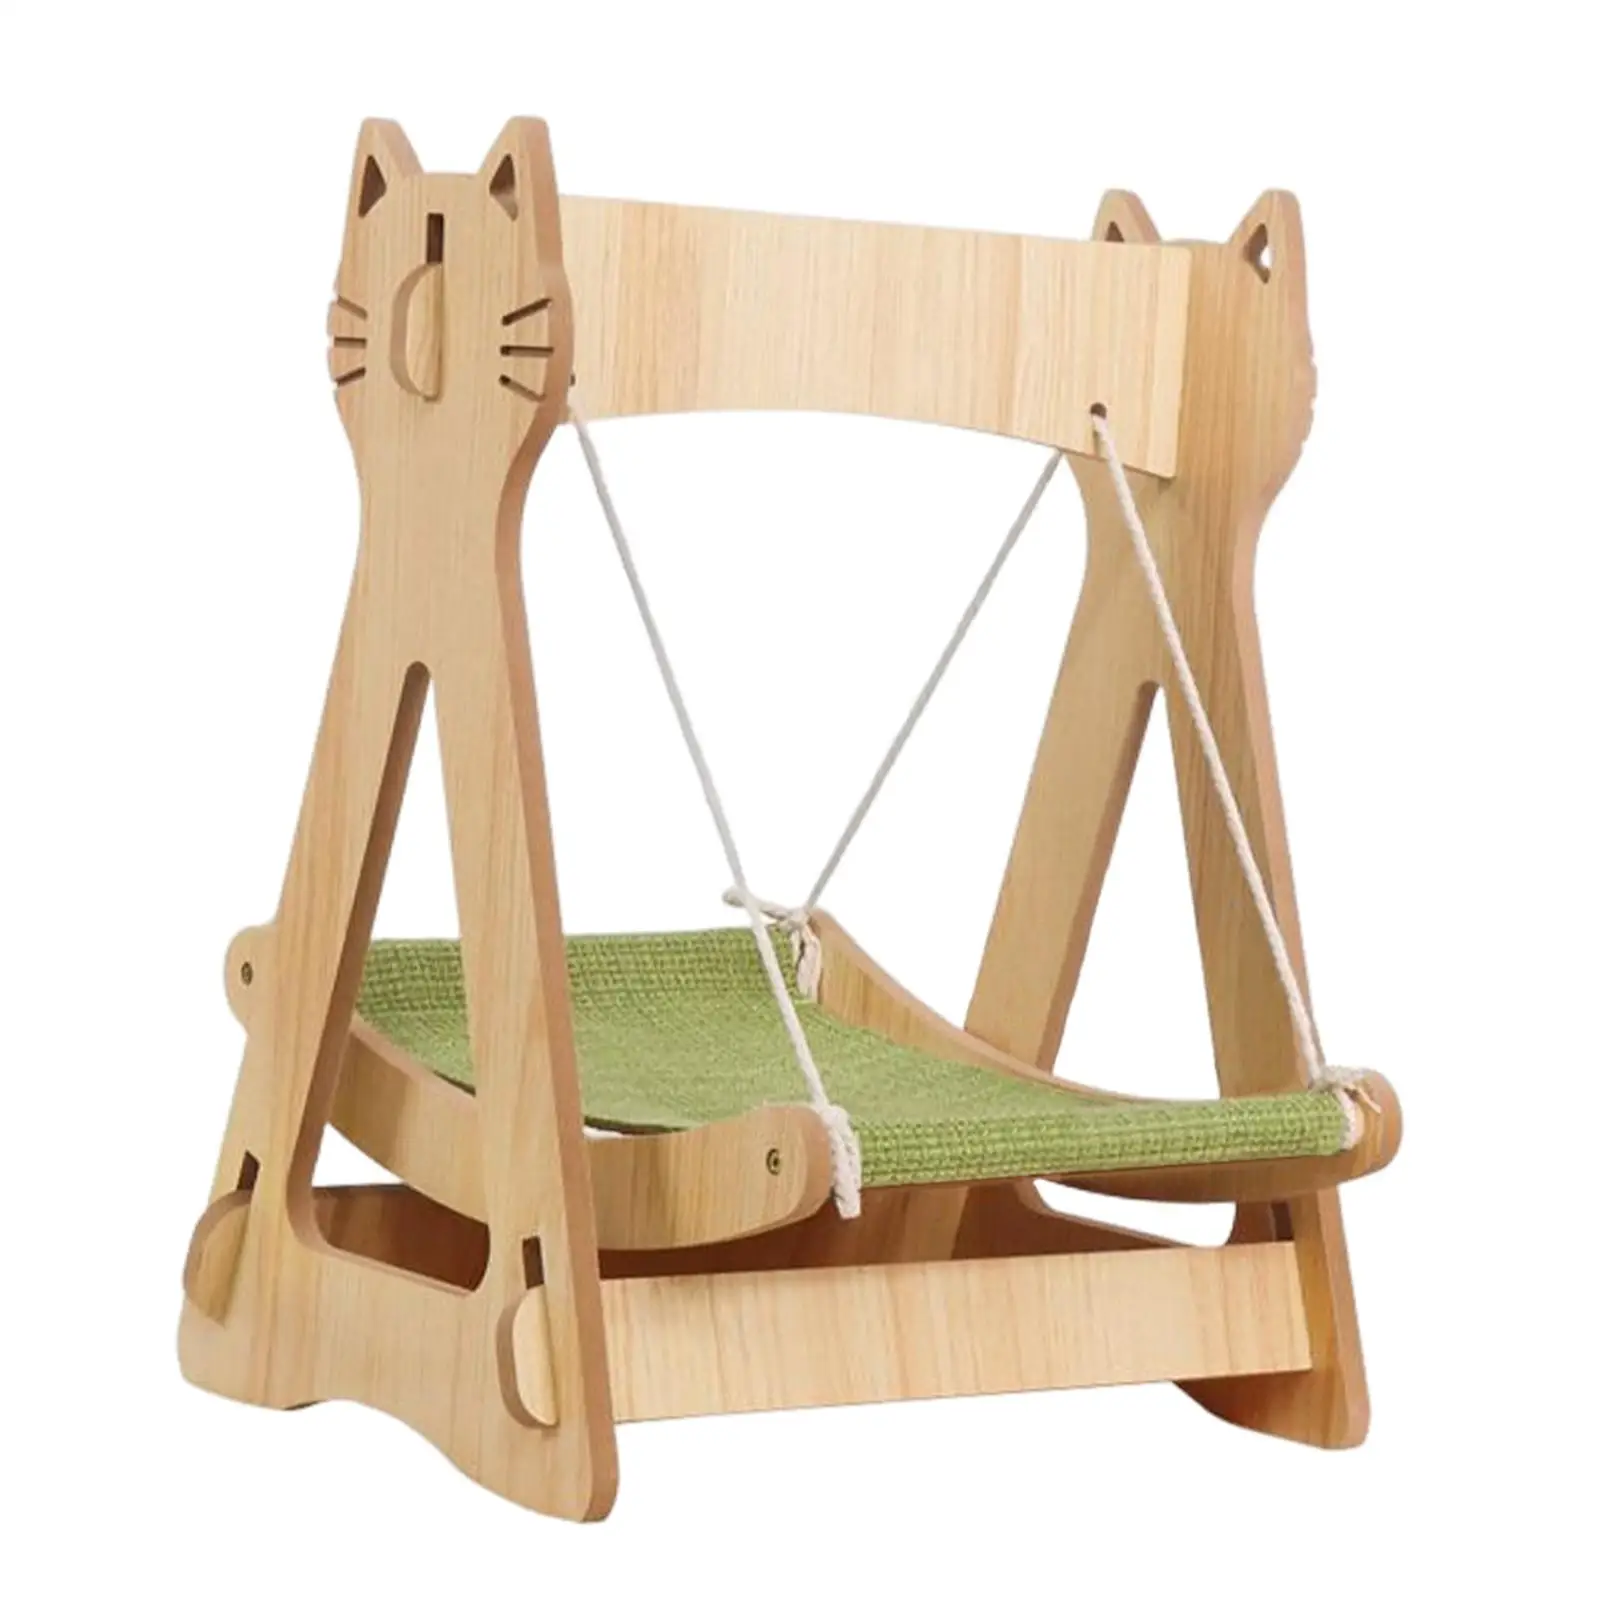 Cat Hammock Activity Toys Cat Sleeping Bed Pet Hanging Swing for Small Medium